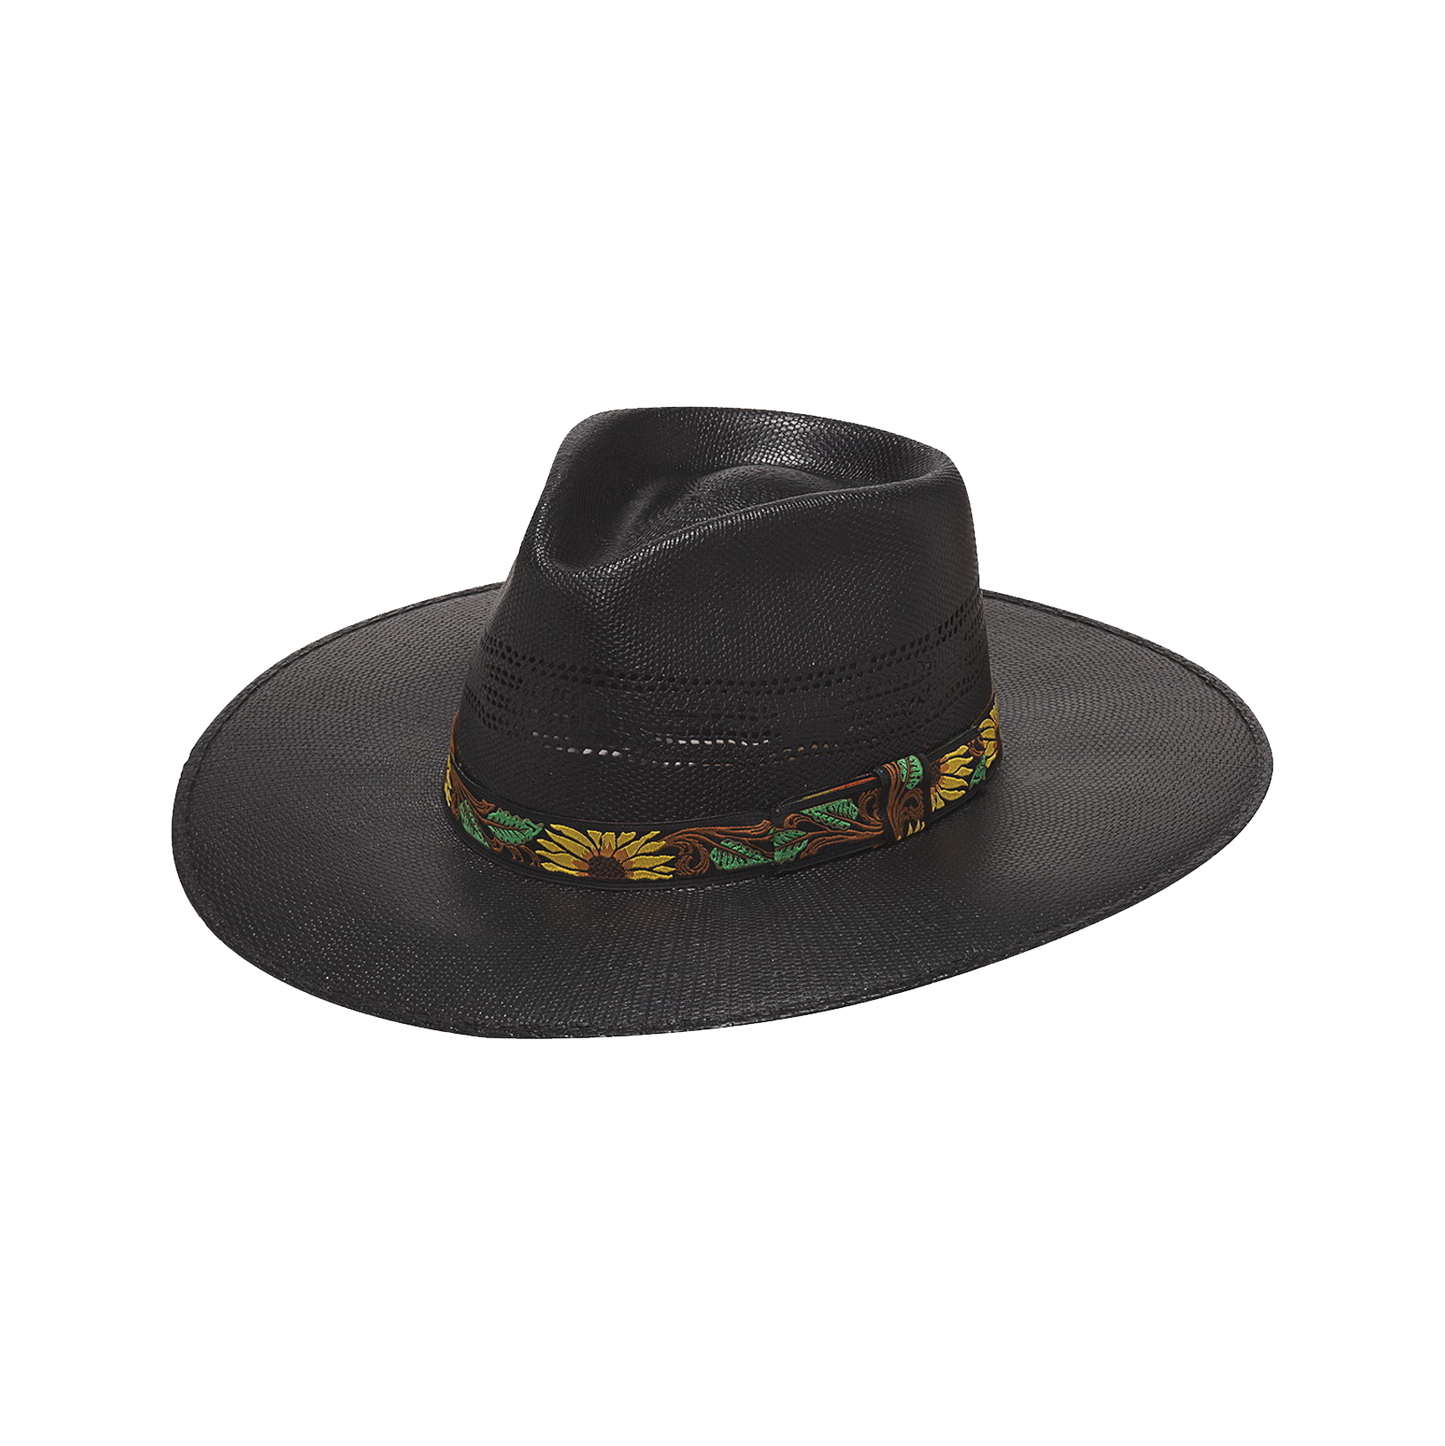 Twister Women's Black Bangora Hat with Sunflower Hatband